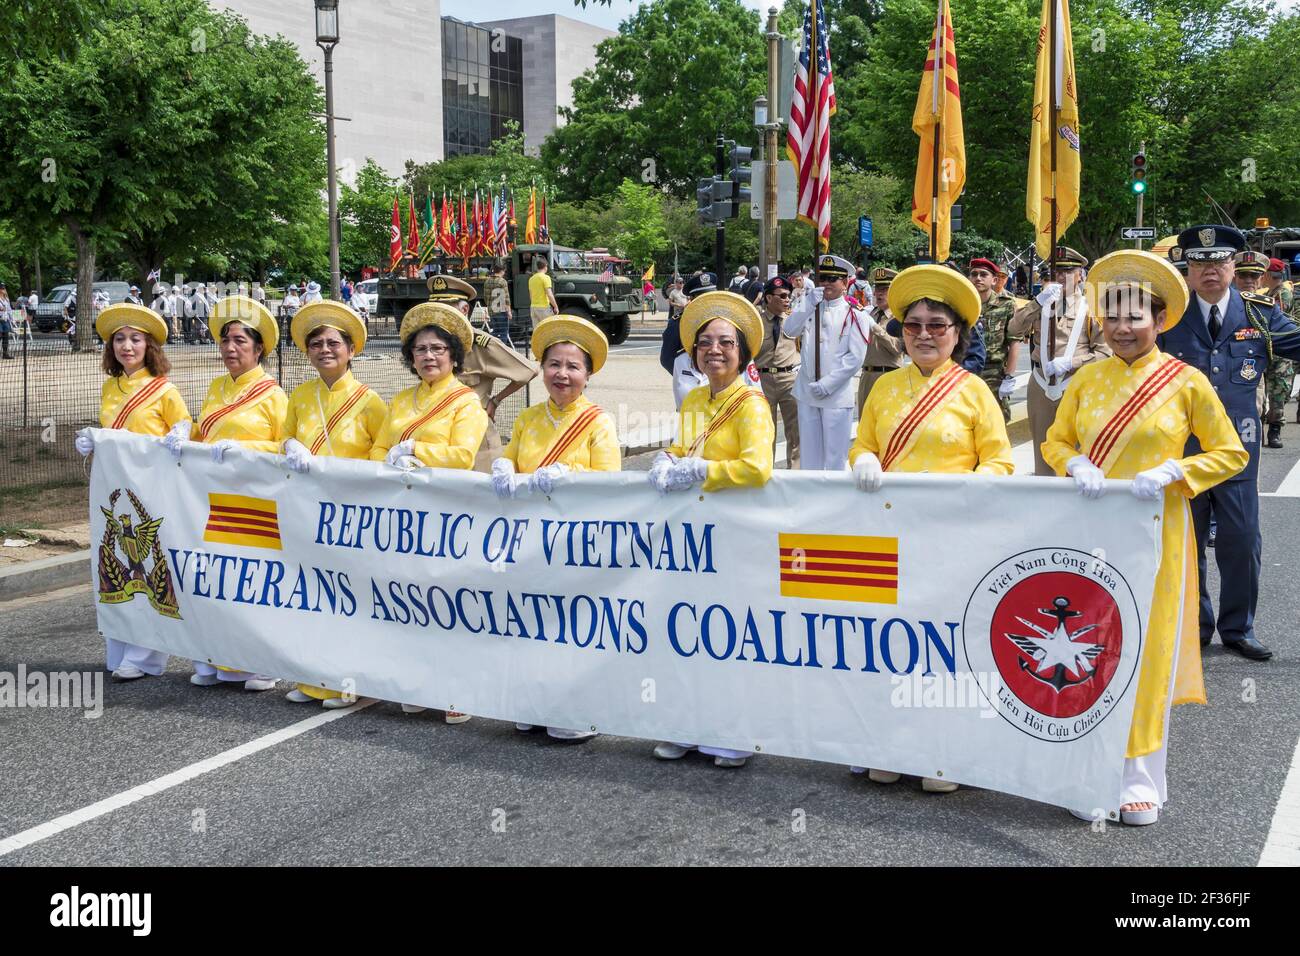 Washington DC, National Memorial Day Parade, Vietnam Veterans Associations Coalition banner, donne asiatiche vestito tradizionale, Foto Stock